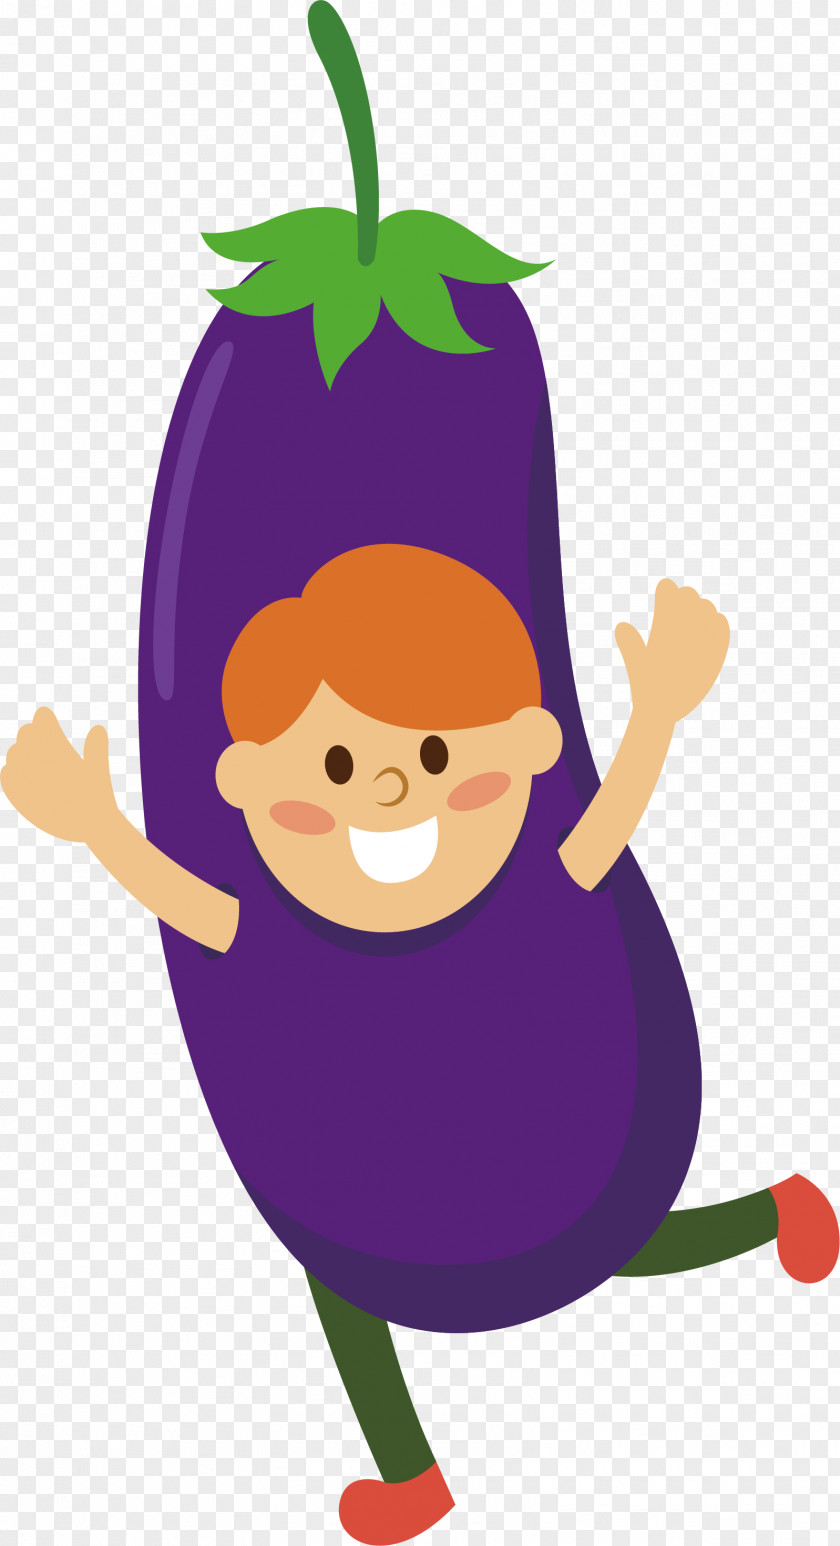 Cheered Eggplant Villain Fruit Vegetable Pivijay Illustration PNG